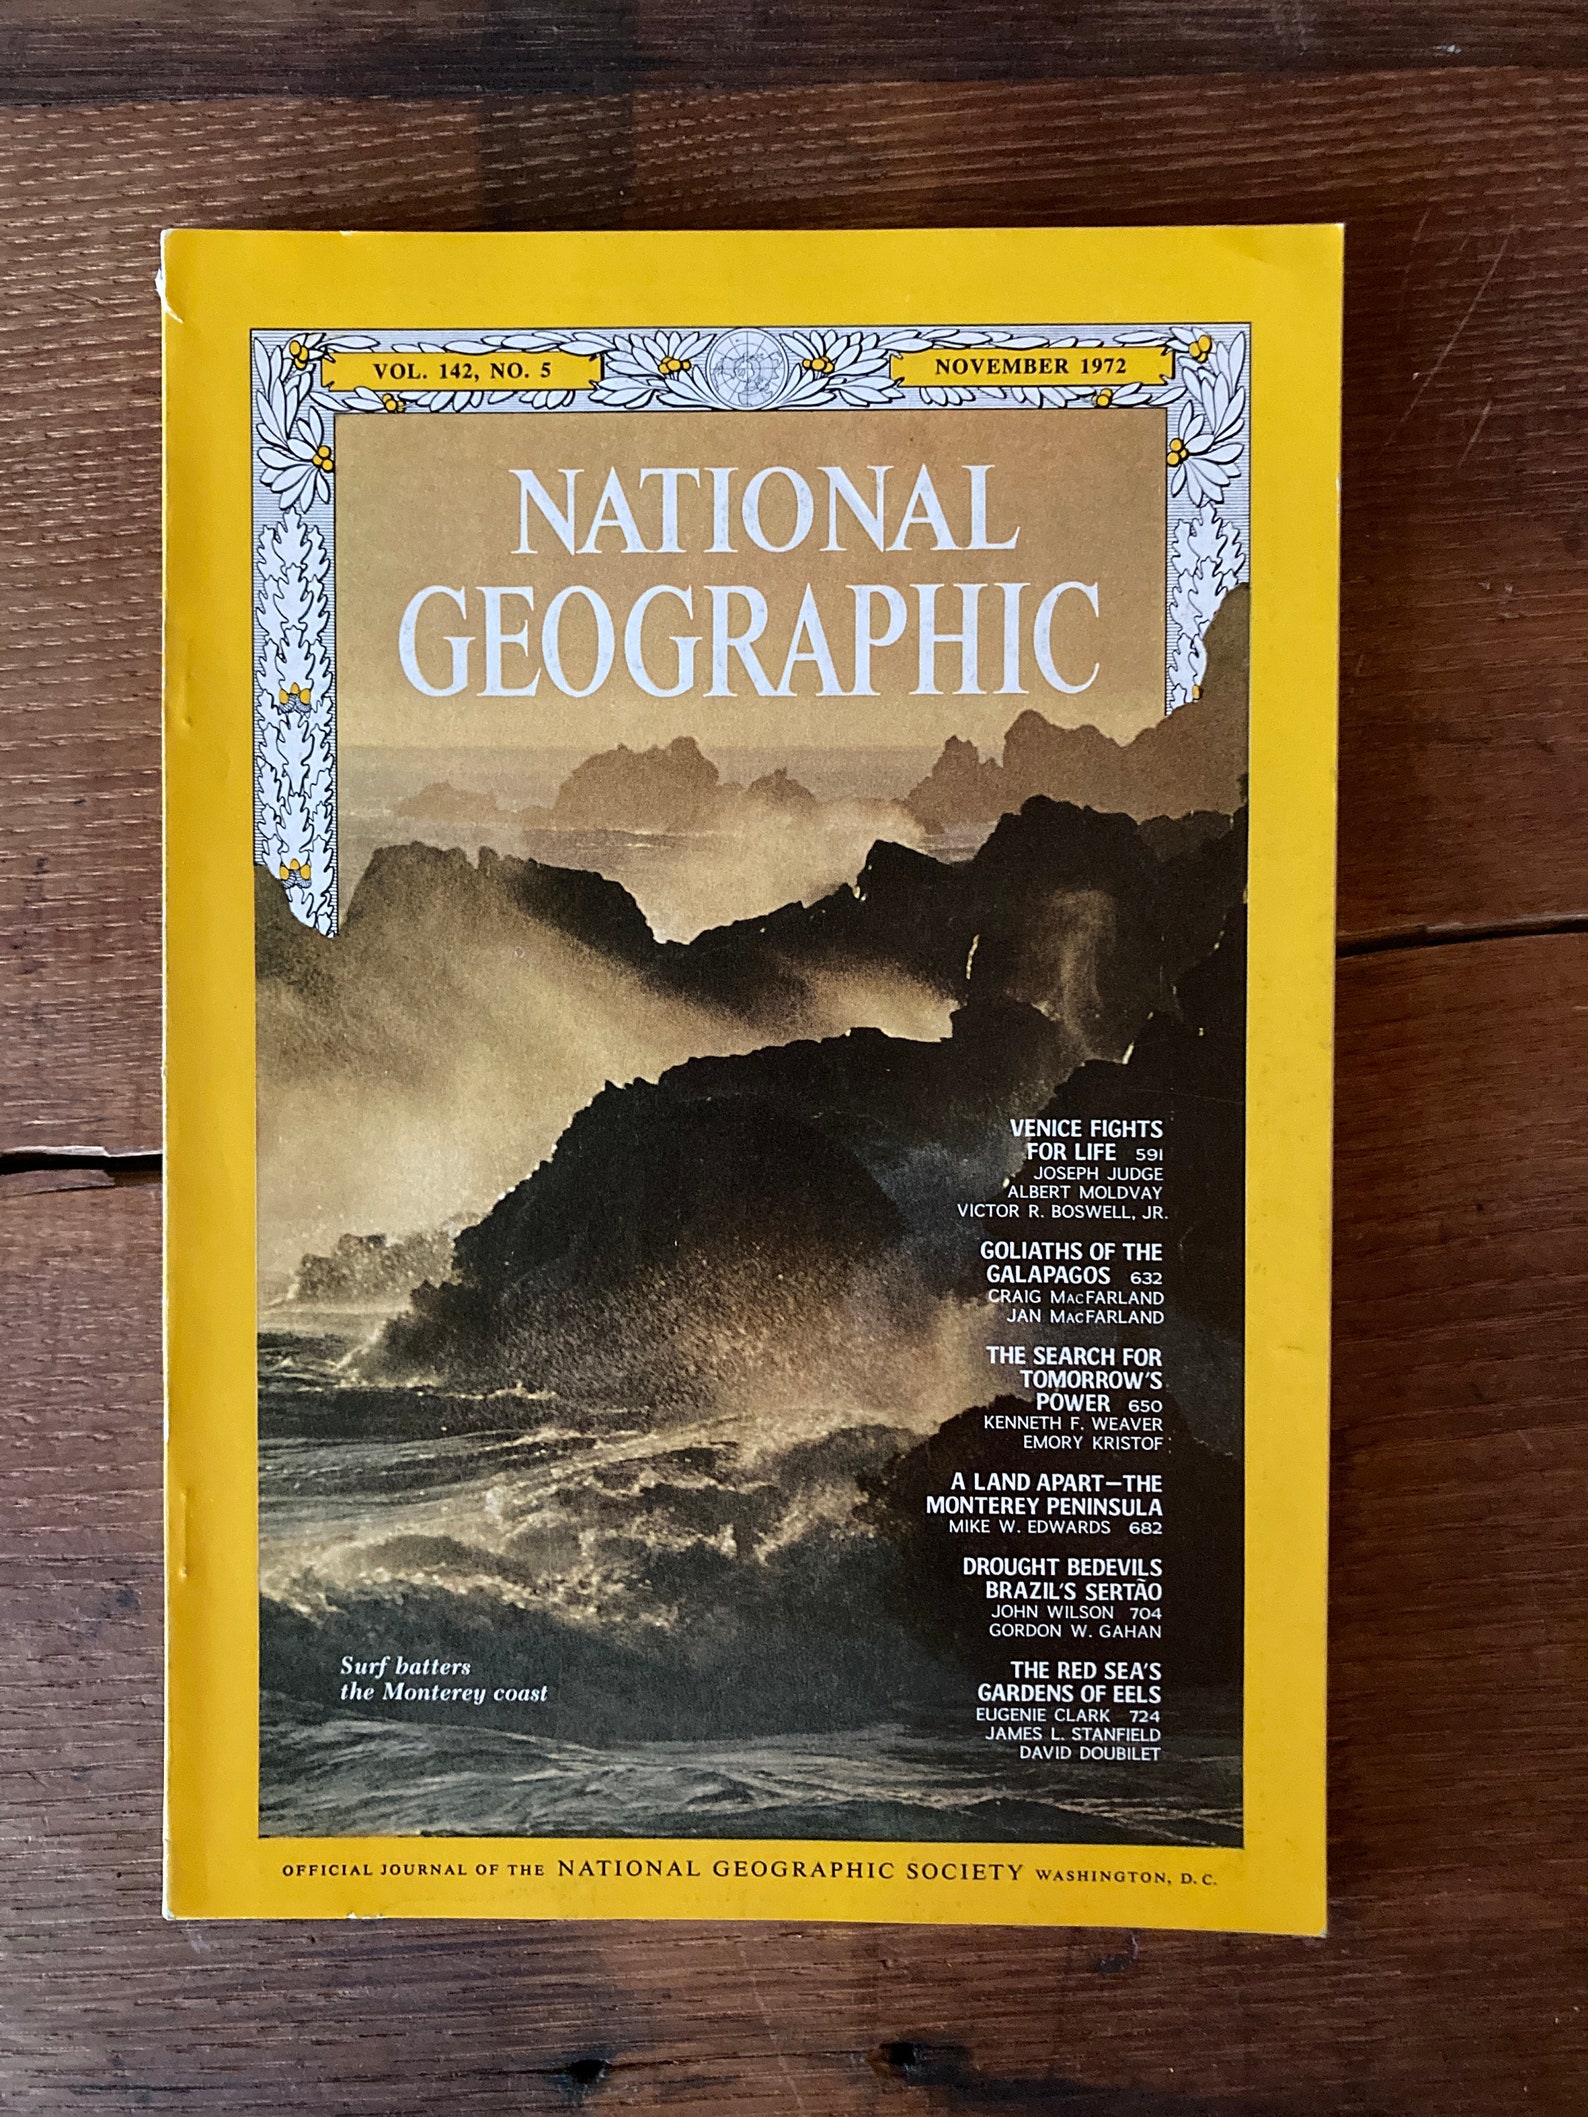 1970s National Geographic Magazines | Etsy